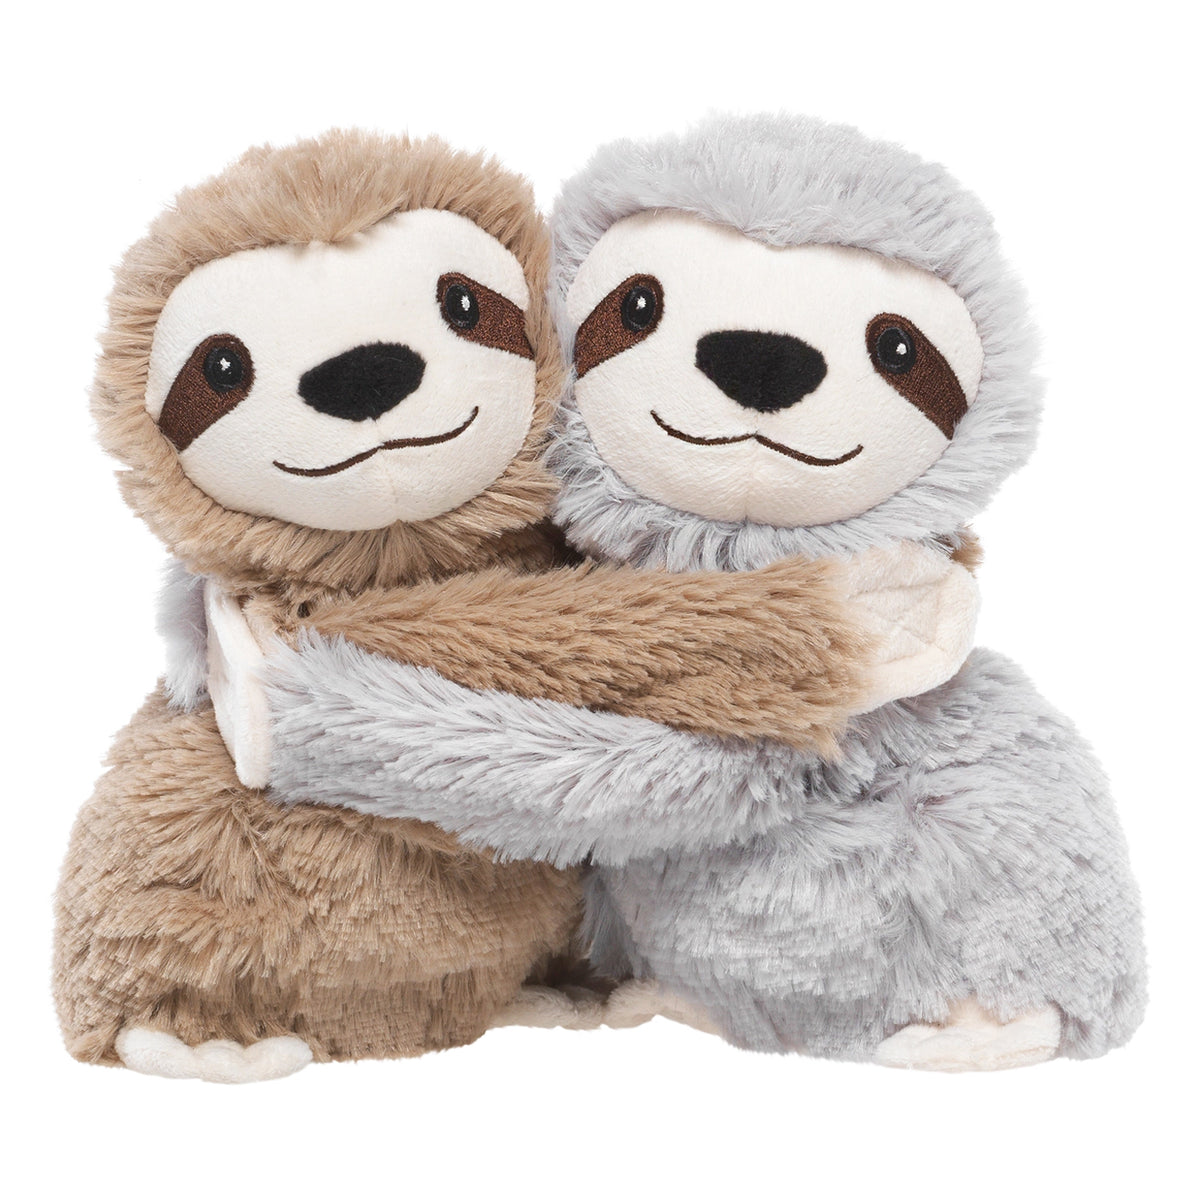 Warming 9" Sloth Hugs